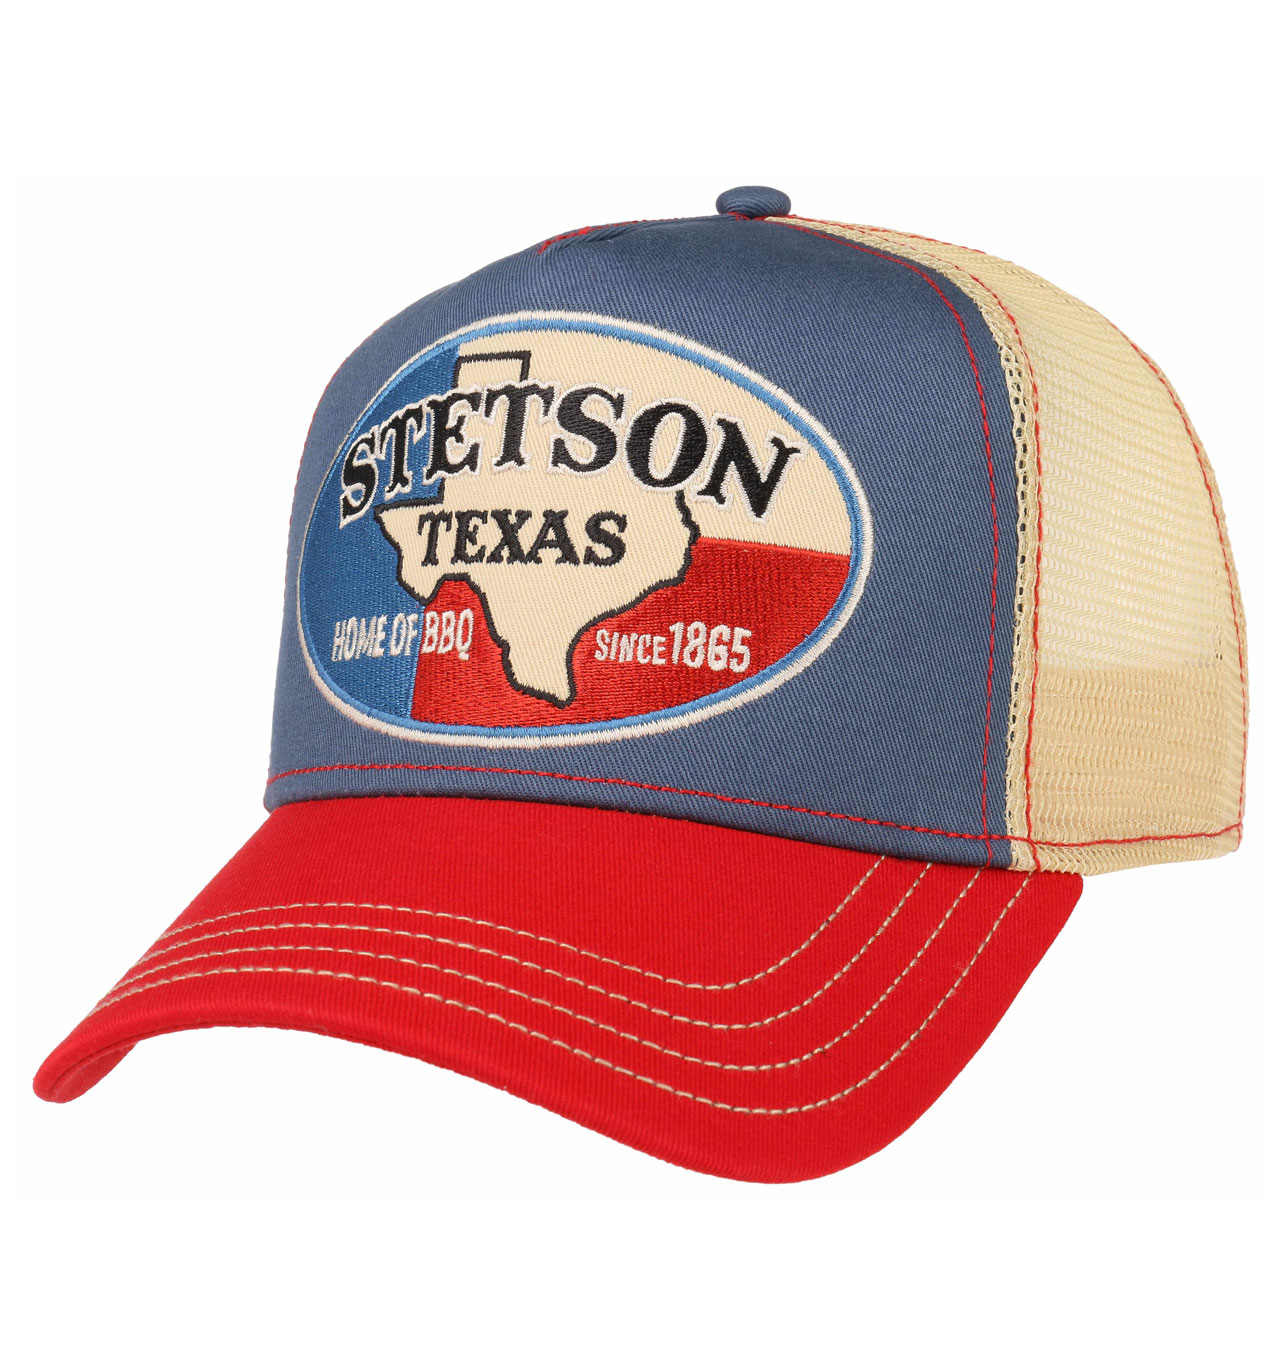 Stetson - Texas Home of BBQ Trucker Cap